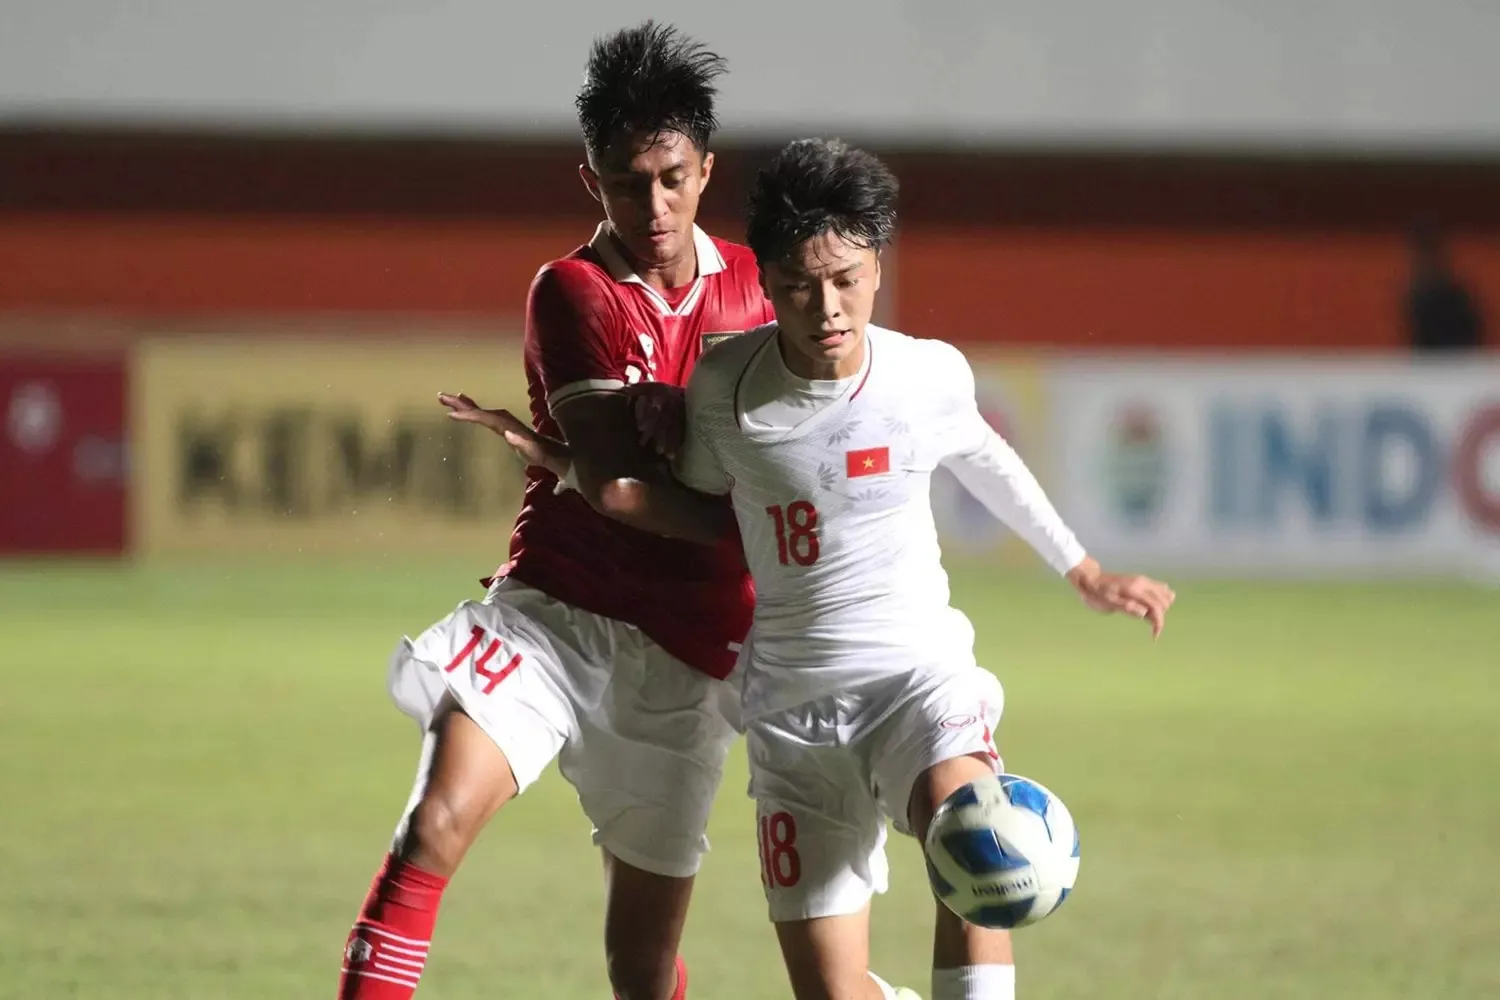 Trực tiếp U16 Việt Nam vs U16 Indonesia link xem trực tiếp U16 Việt Nam vs U16 Indonesia: 20h00 12/08/2022